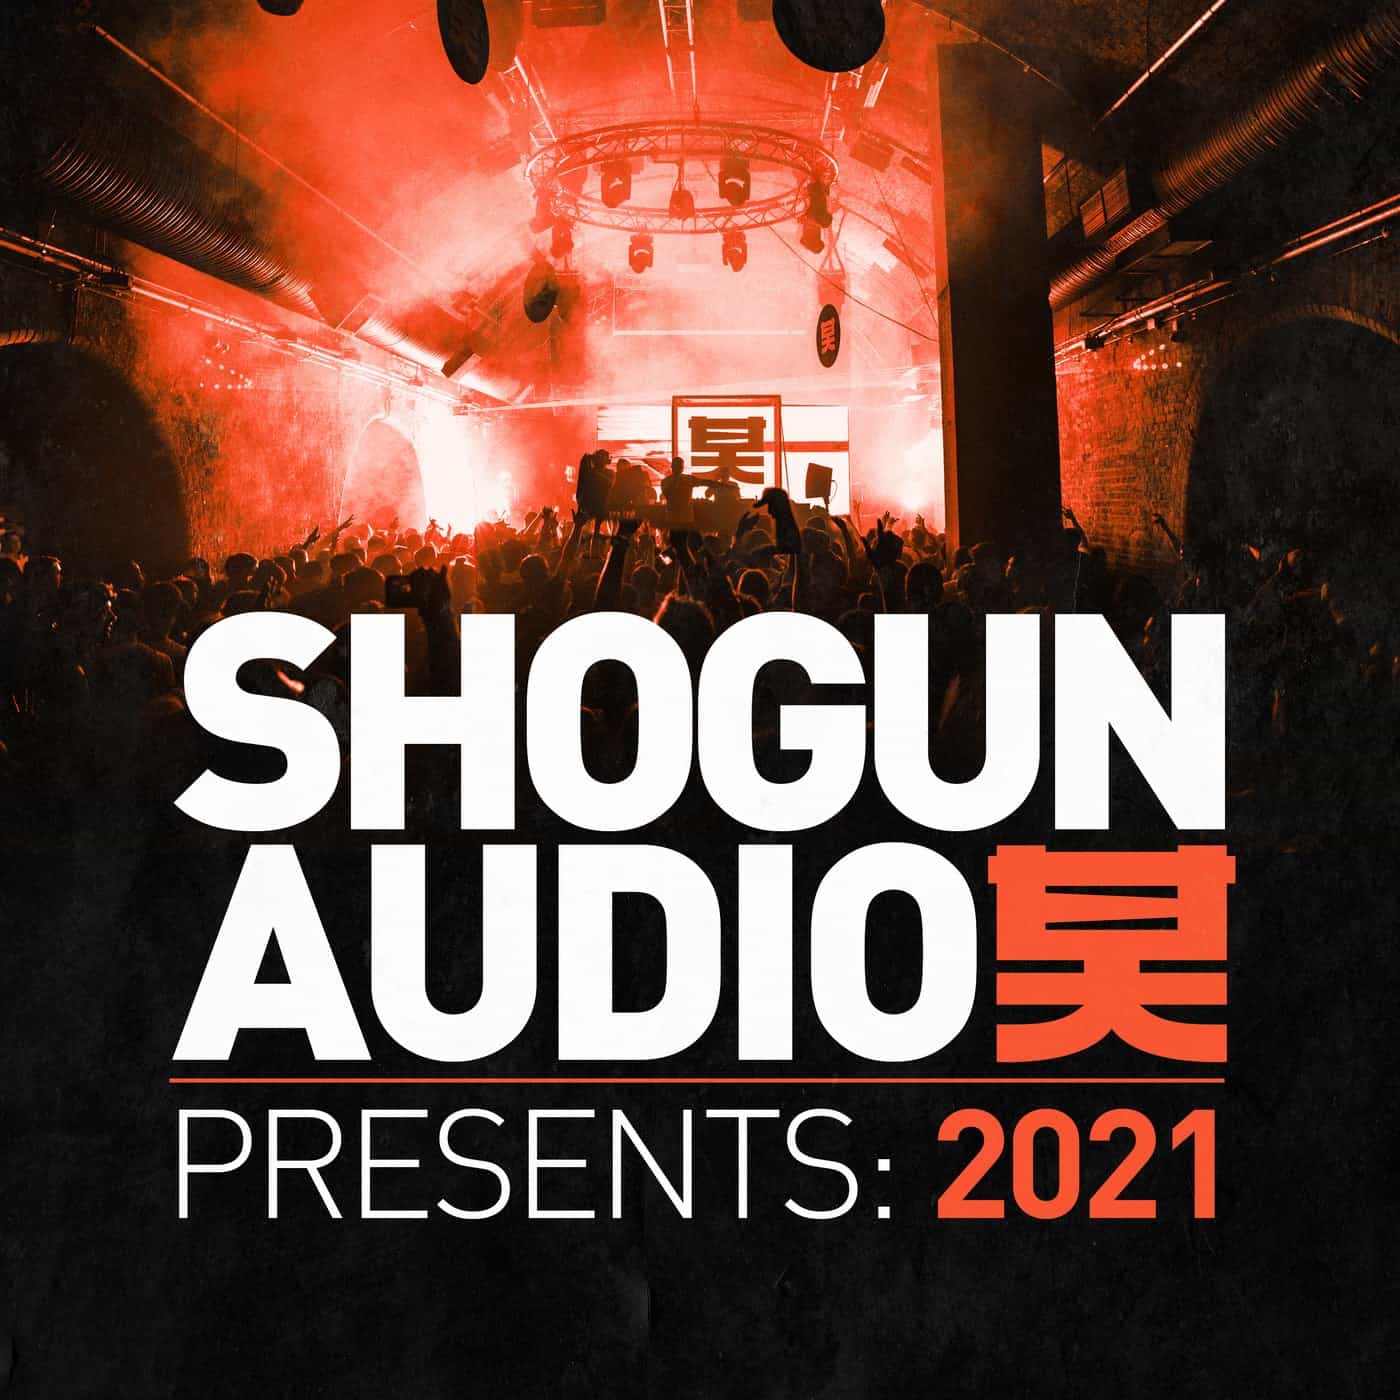 Download Shogun Audio: Presents 2021 on Electrobuzz